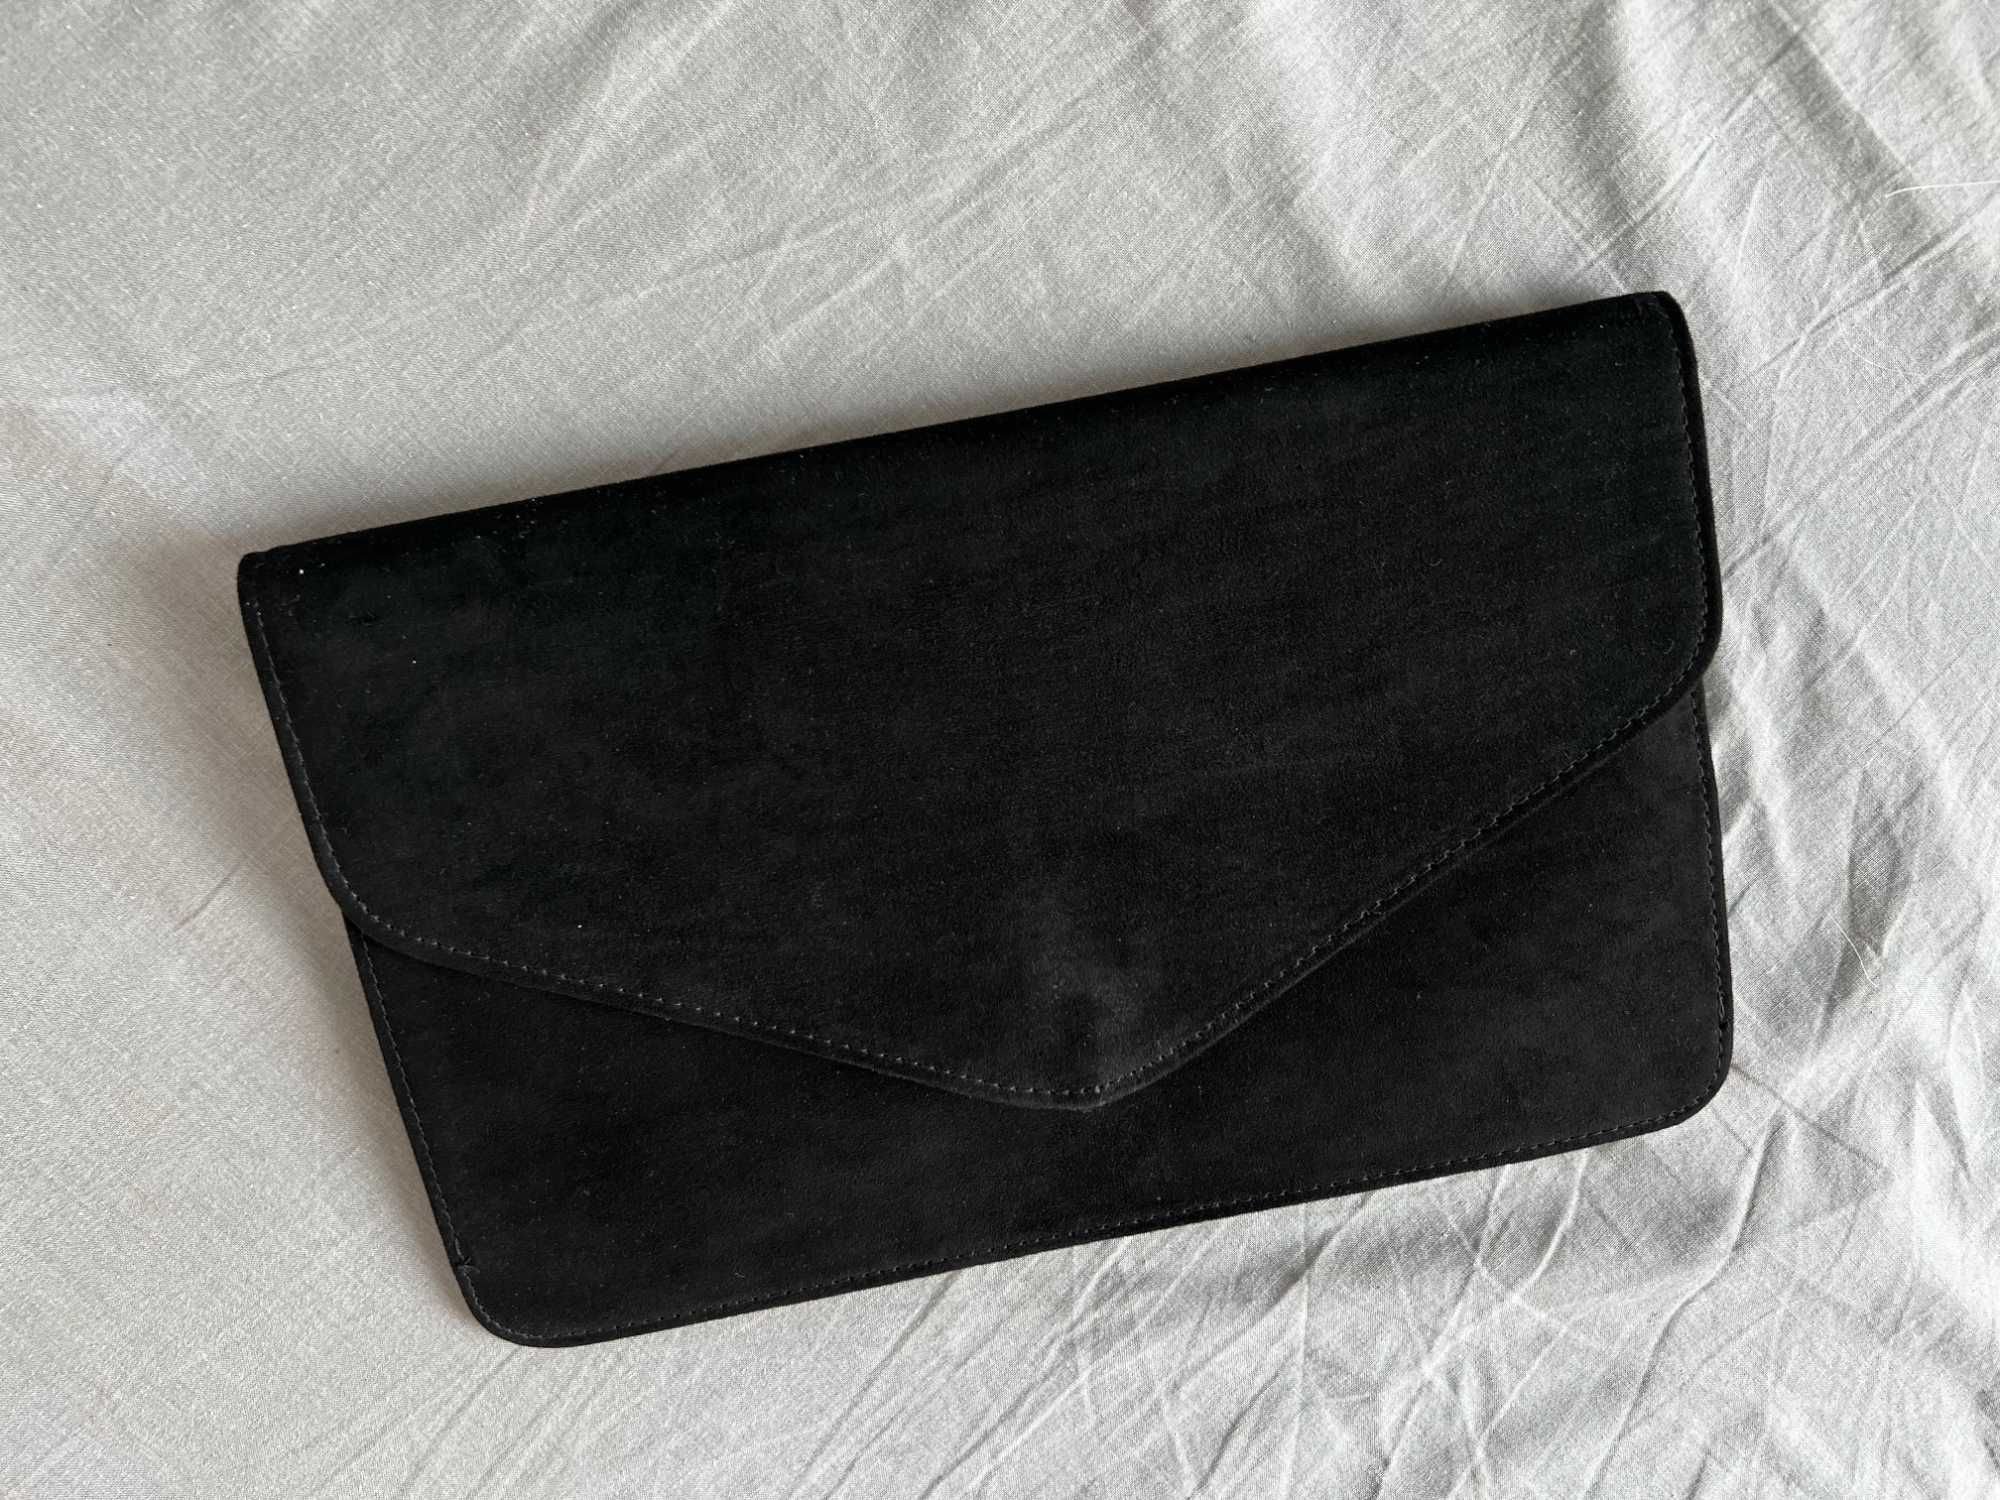 ASOS czarna zamszowa torebka elegancka kopertówka